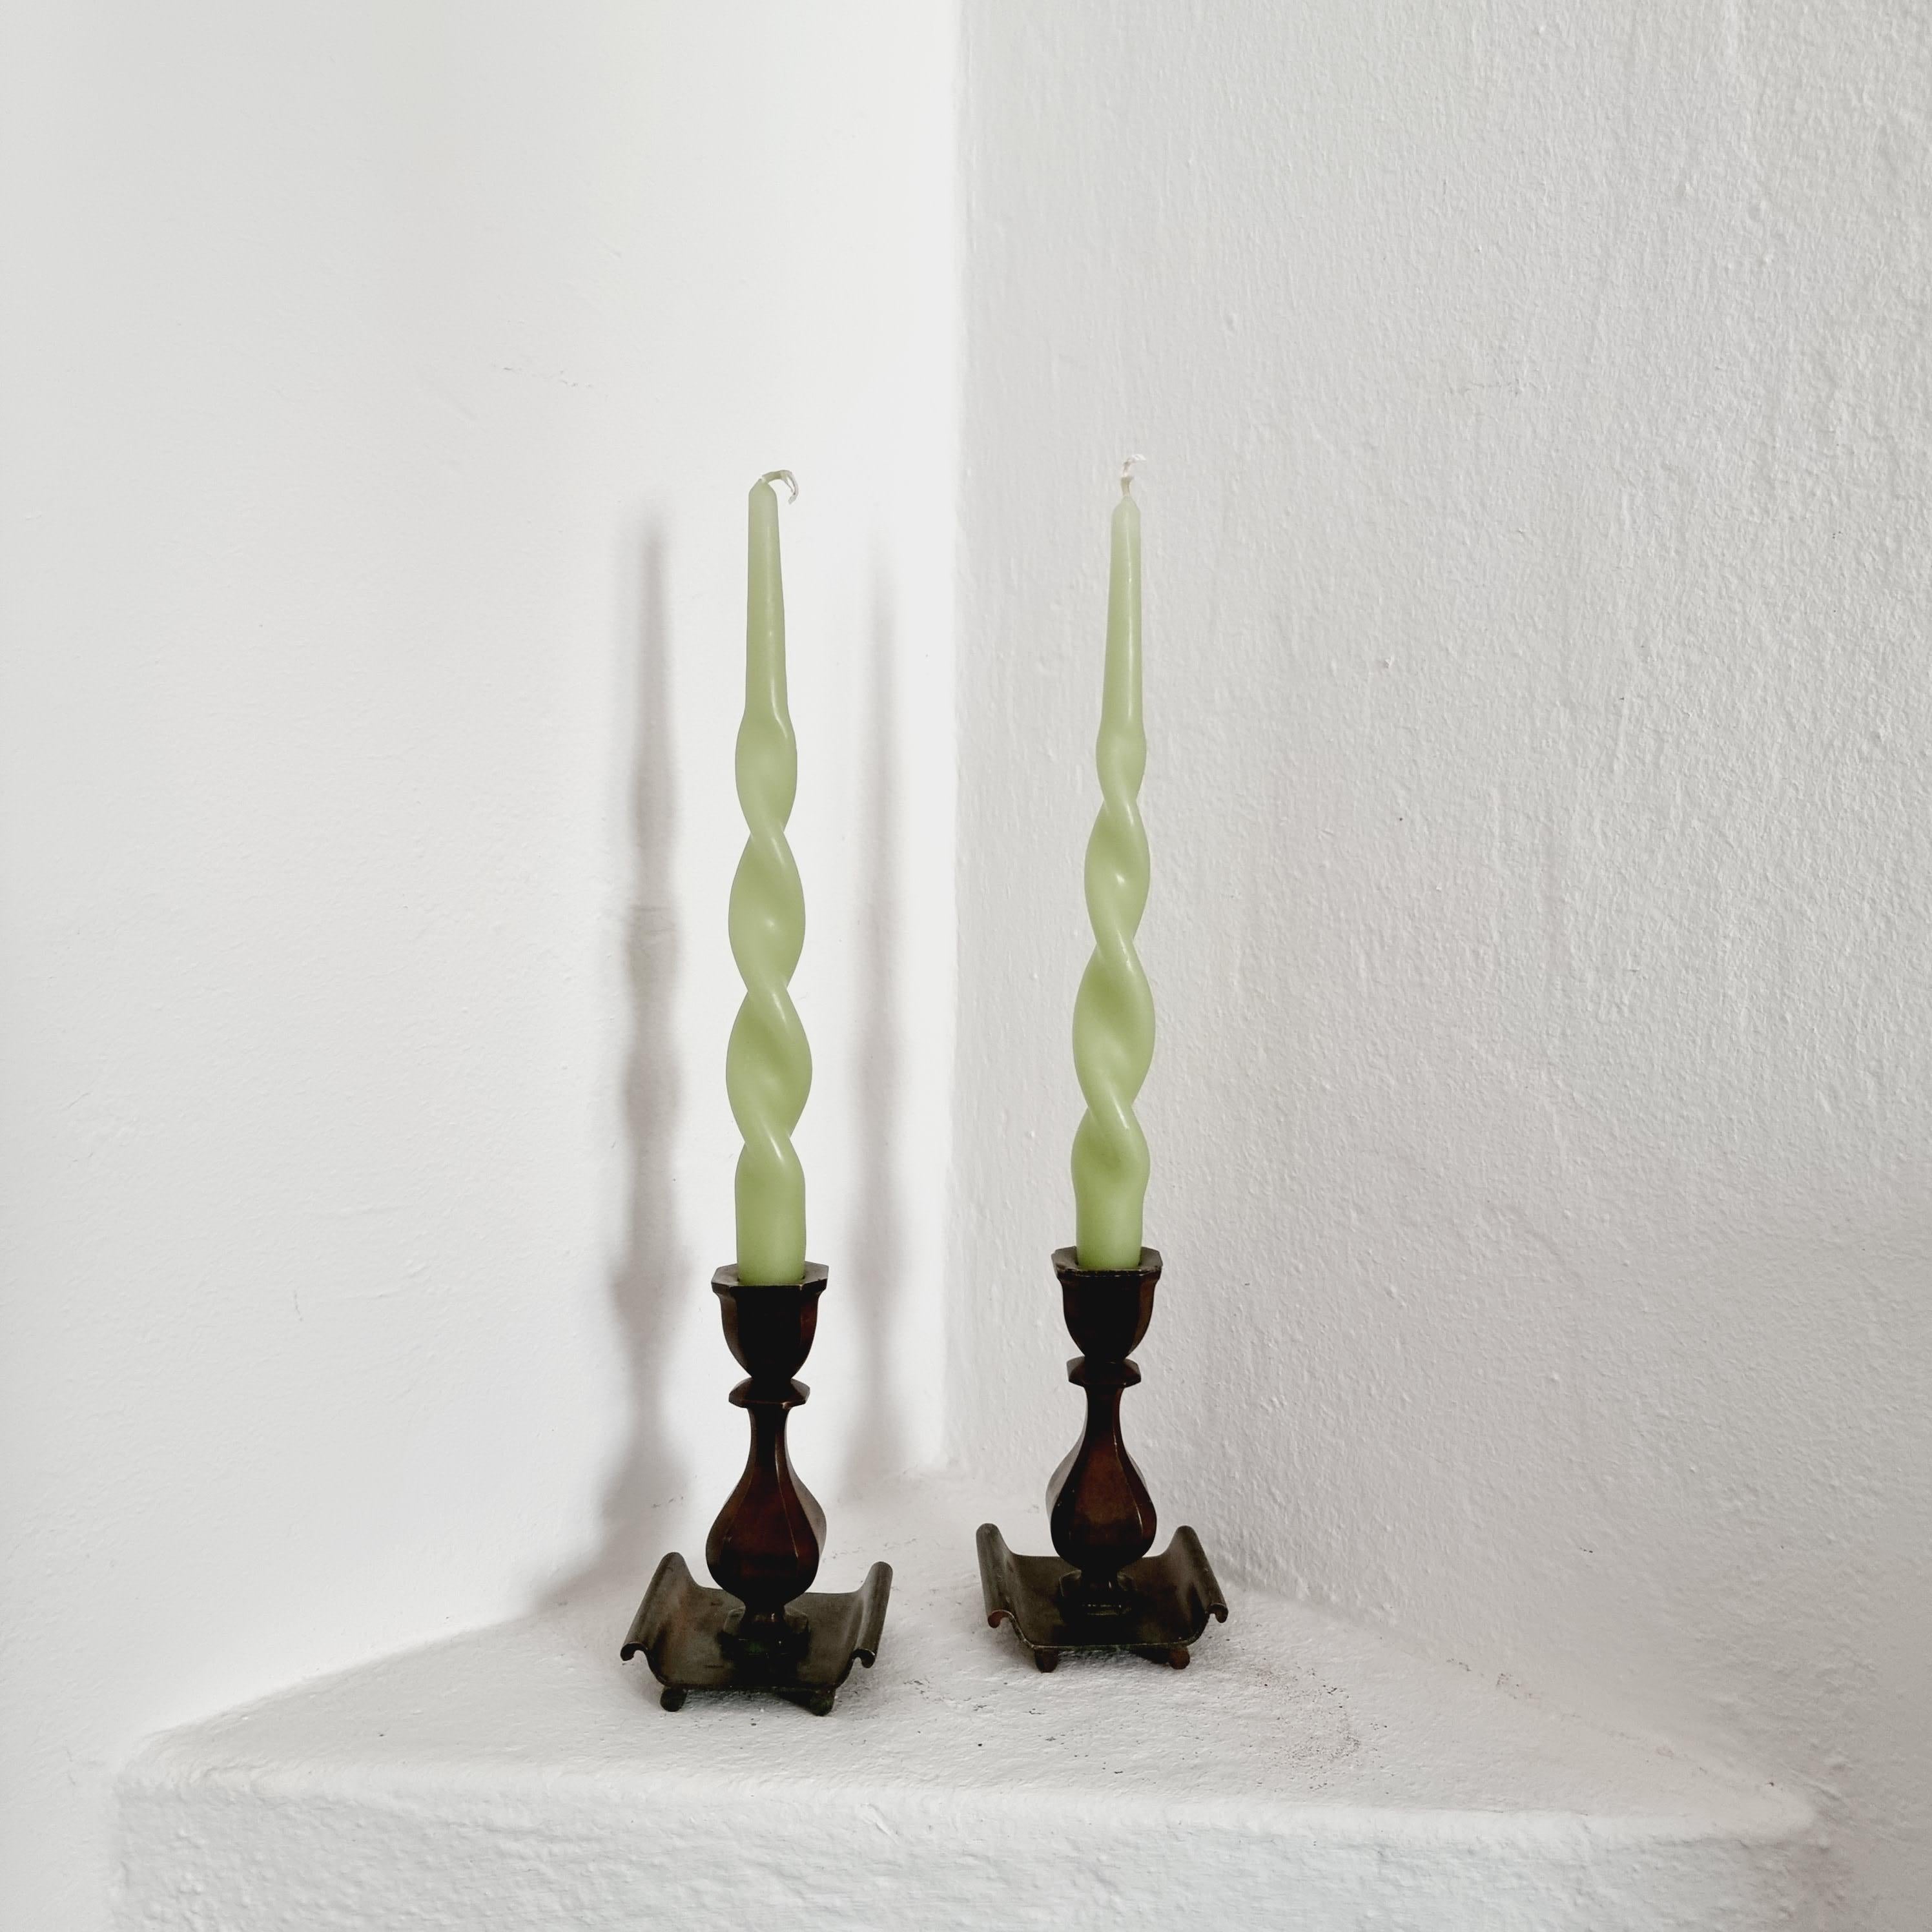 A pair of solid bronze candlesticks, by Sune Backström, Sweden. Swedish Modern / Art Deco. 

Signed: Sune Backström, Brons. 

Guldsmedsaktiebolaget / GAB, is a Swedish manufacturer of cutlery in Eskilstuna. The company was founded in Stockholm